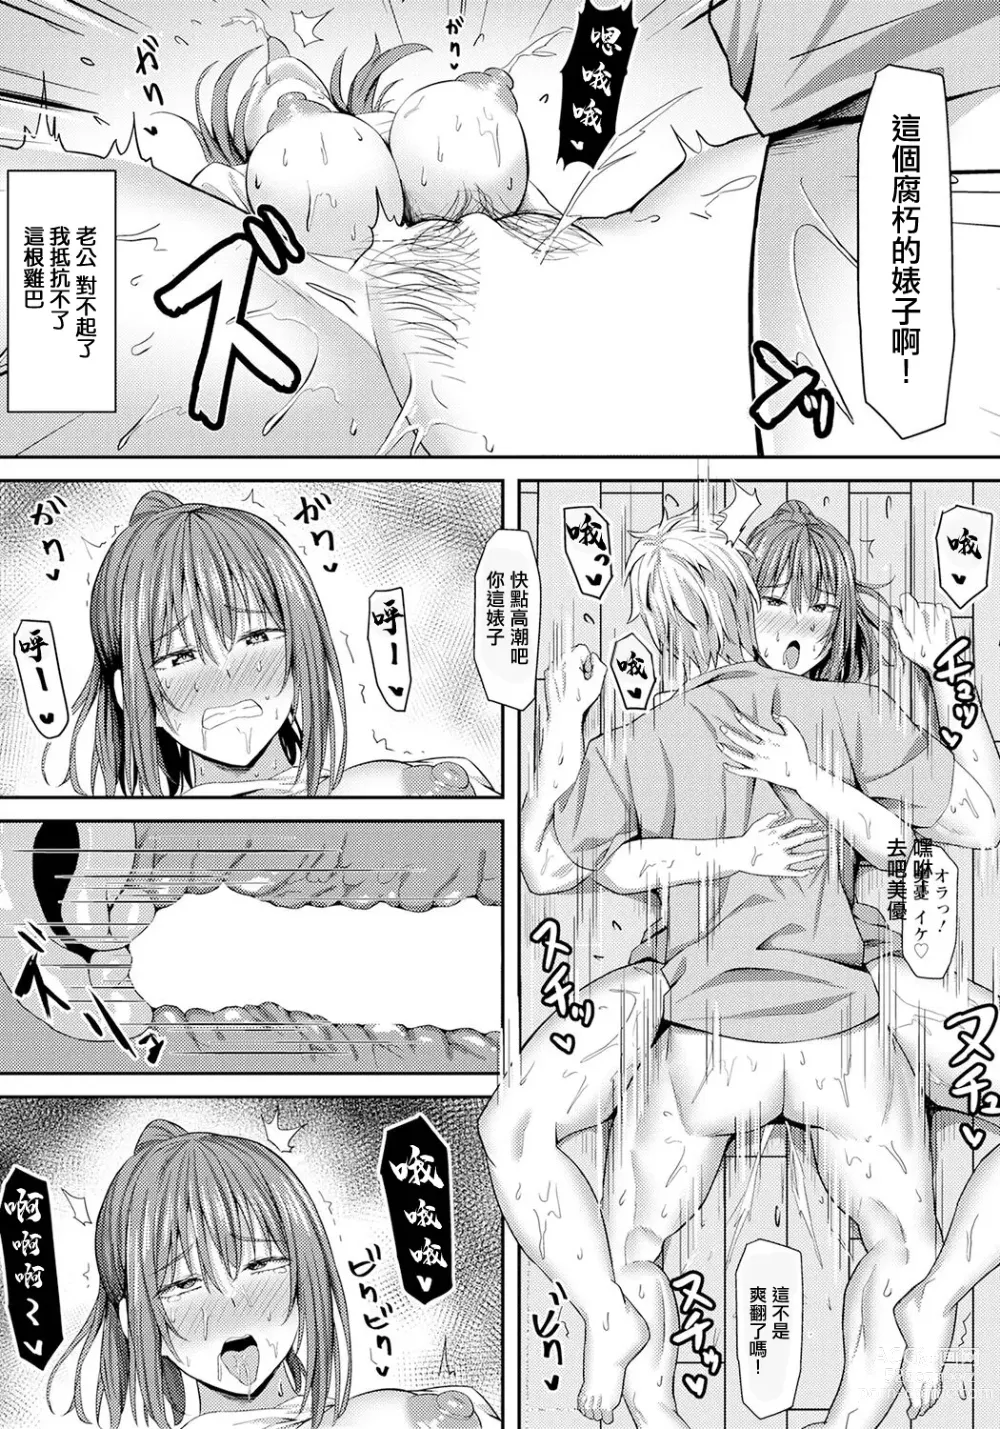 Page 9 of manga Yokkyuu Fuman Tsuma no Inkou